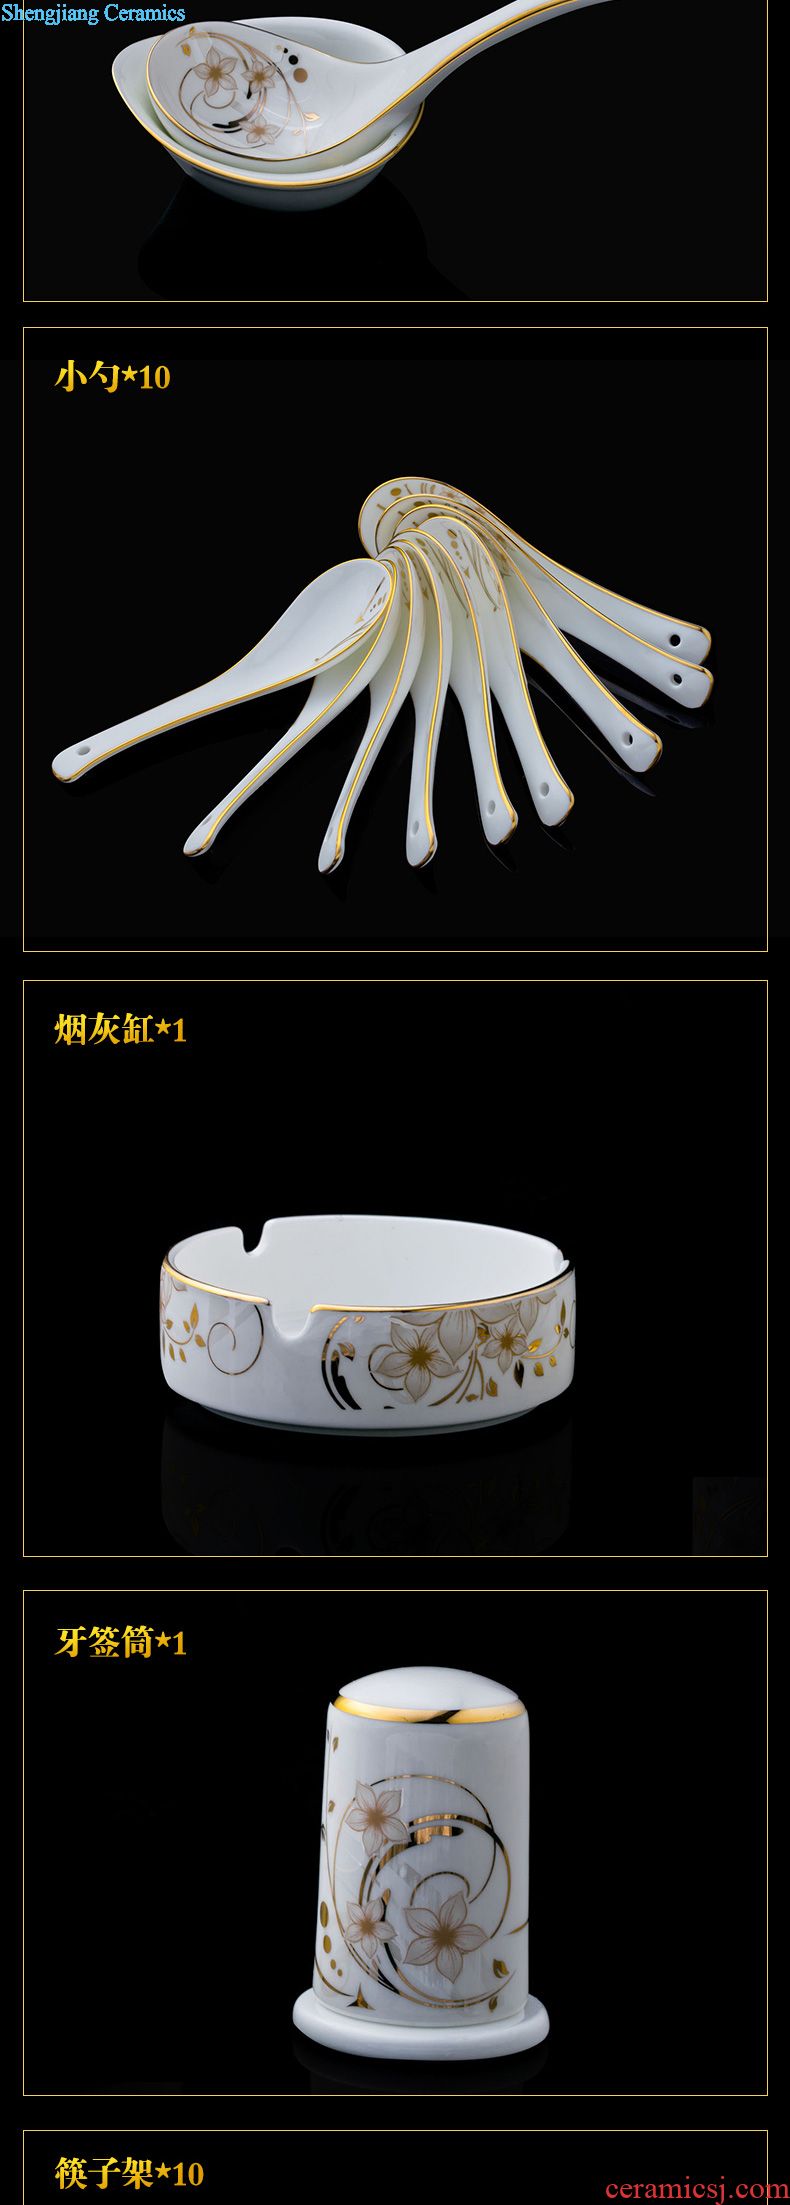 Jingdezhen high-grade bone China tableware suit dishes suit household European gold plate creative dishes chopsticks